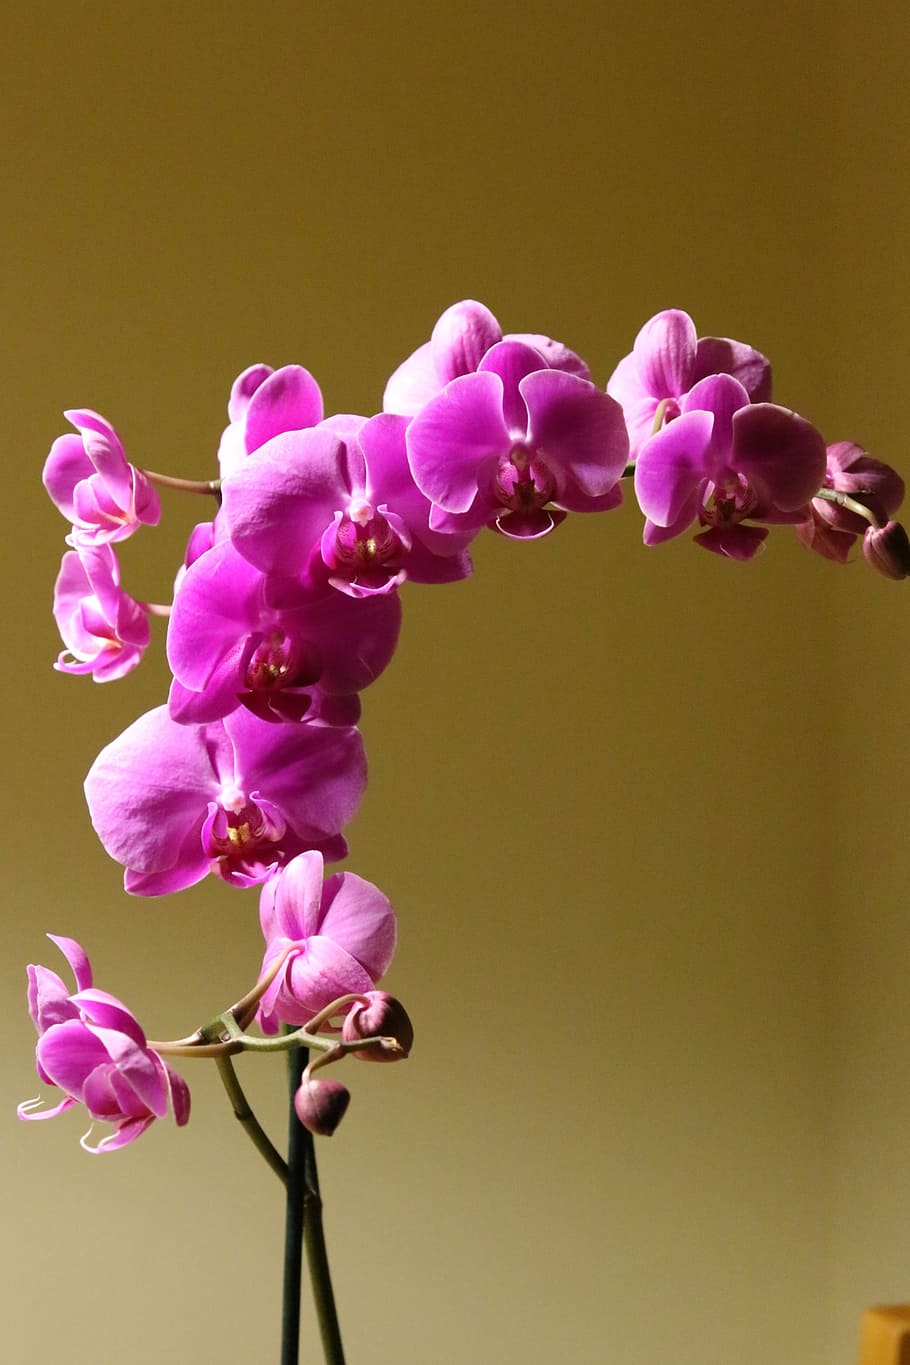 Orchid, Flower, Plant, Pink, orchid, flower, nature, pink Color, springtime, flower Head, close-up